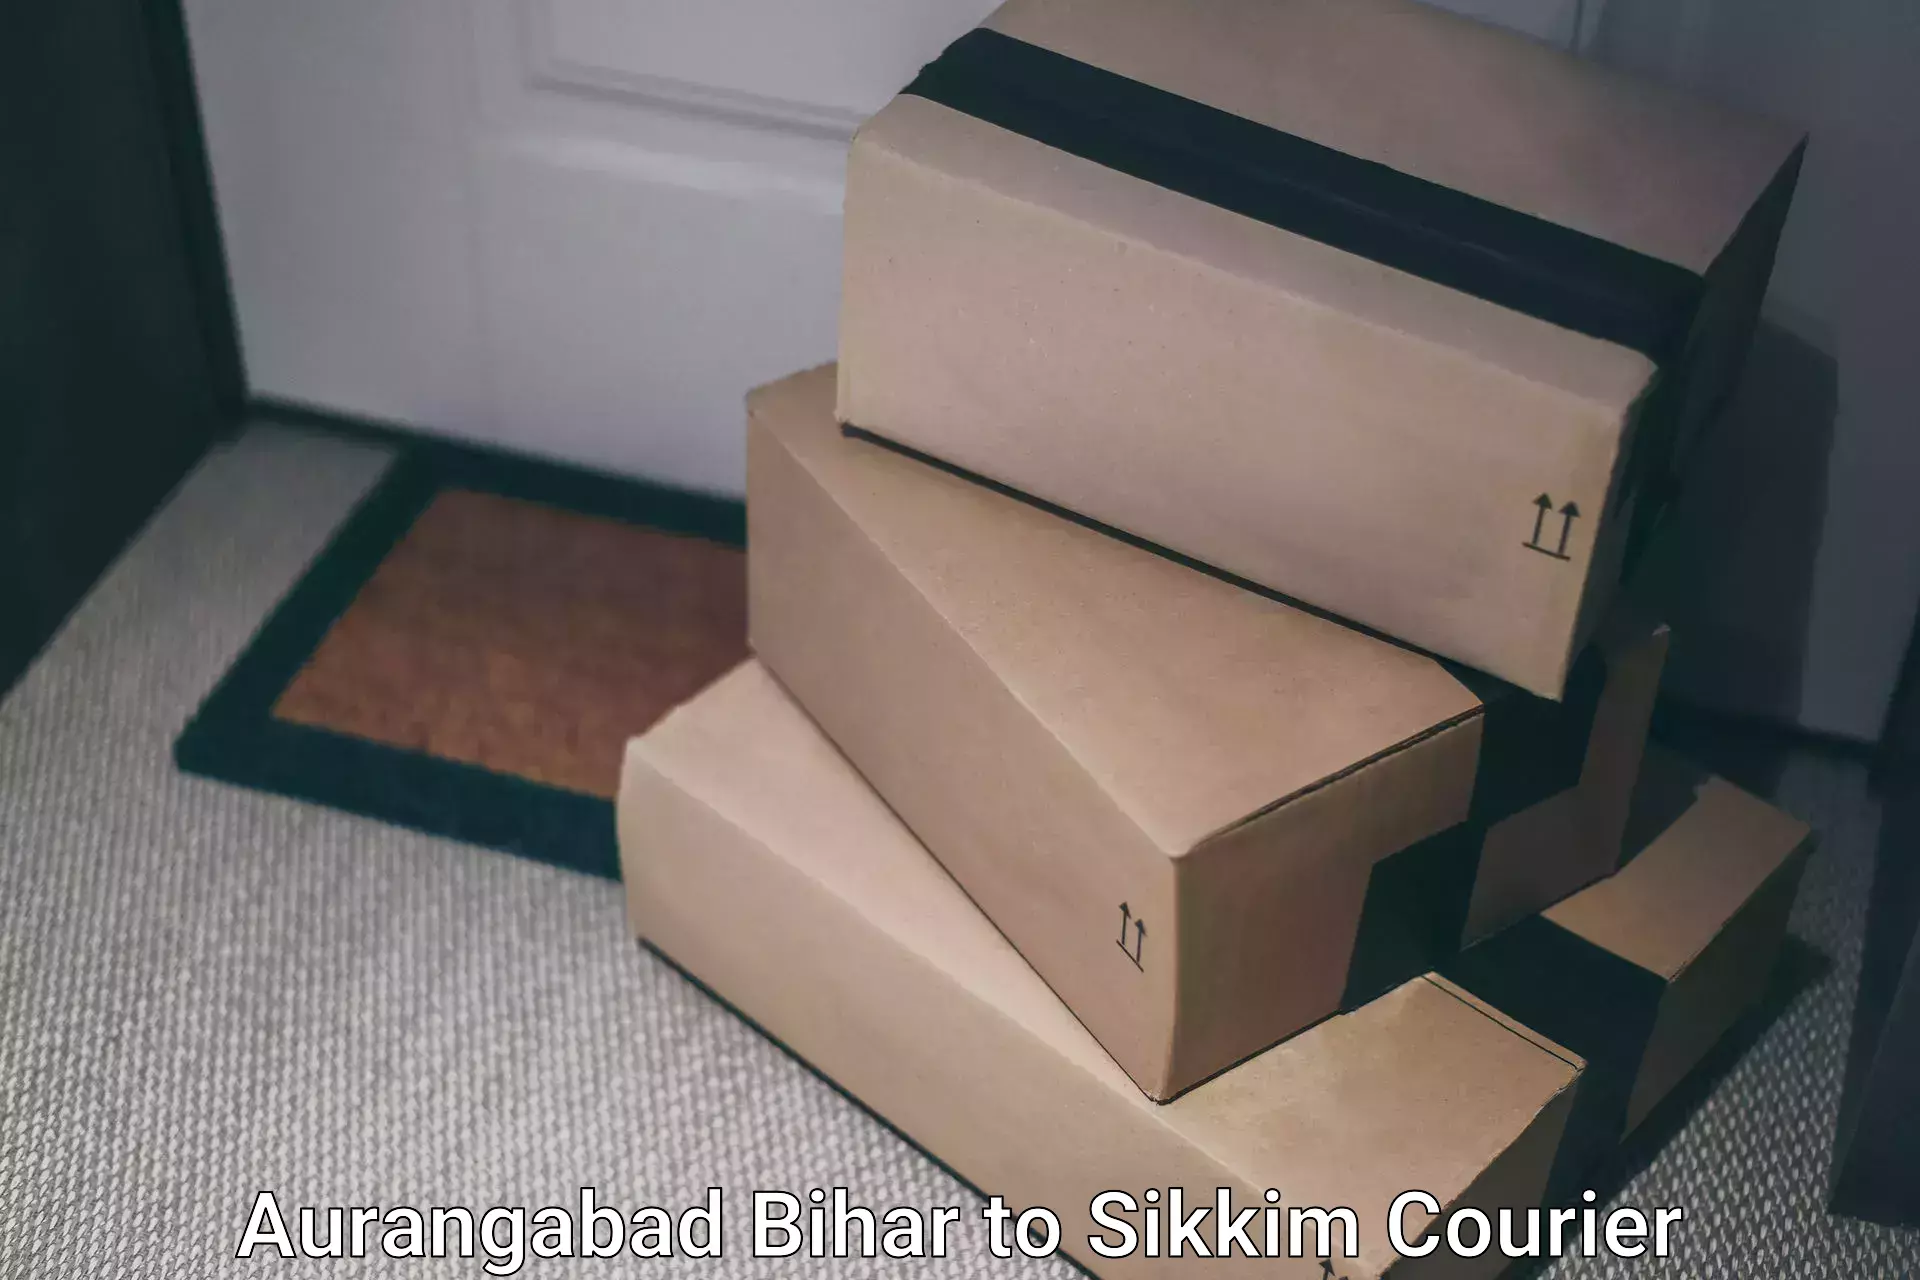 Local delivery service Aurangabad Bihar to Sikkim